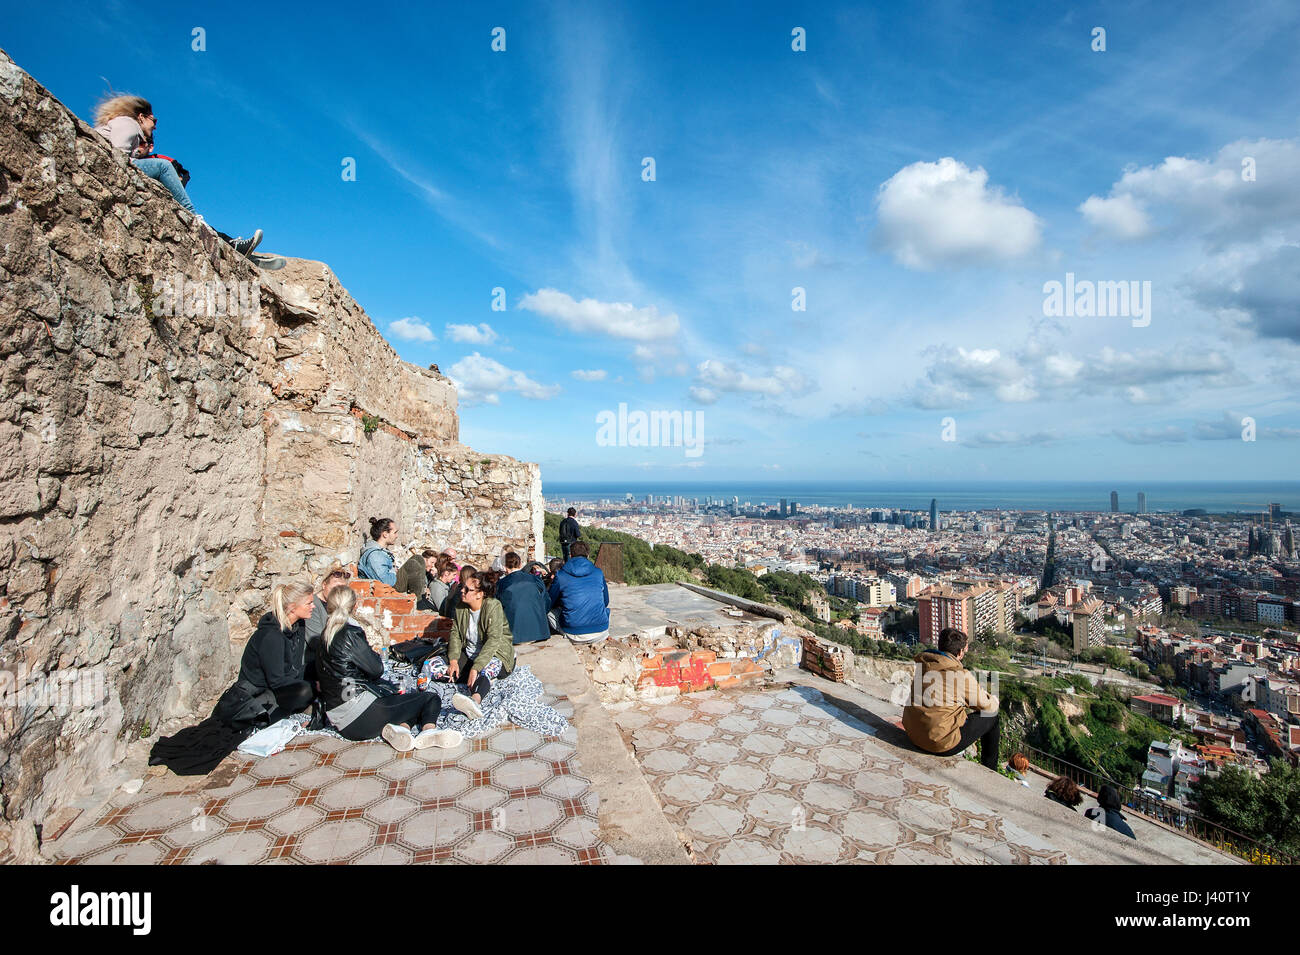 Junge Leute picknicken auf der Bunkeranlage Bunkers del Carmel mit Blick Ÿber Barcelona. Stock Photo